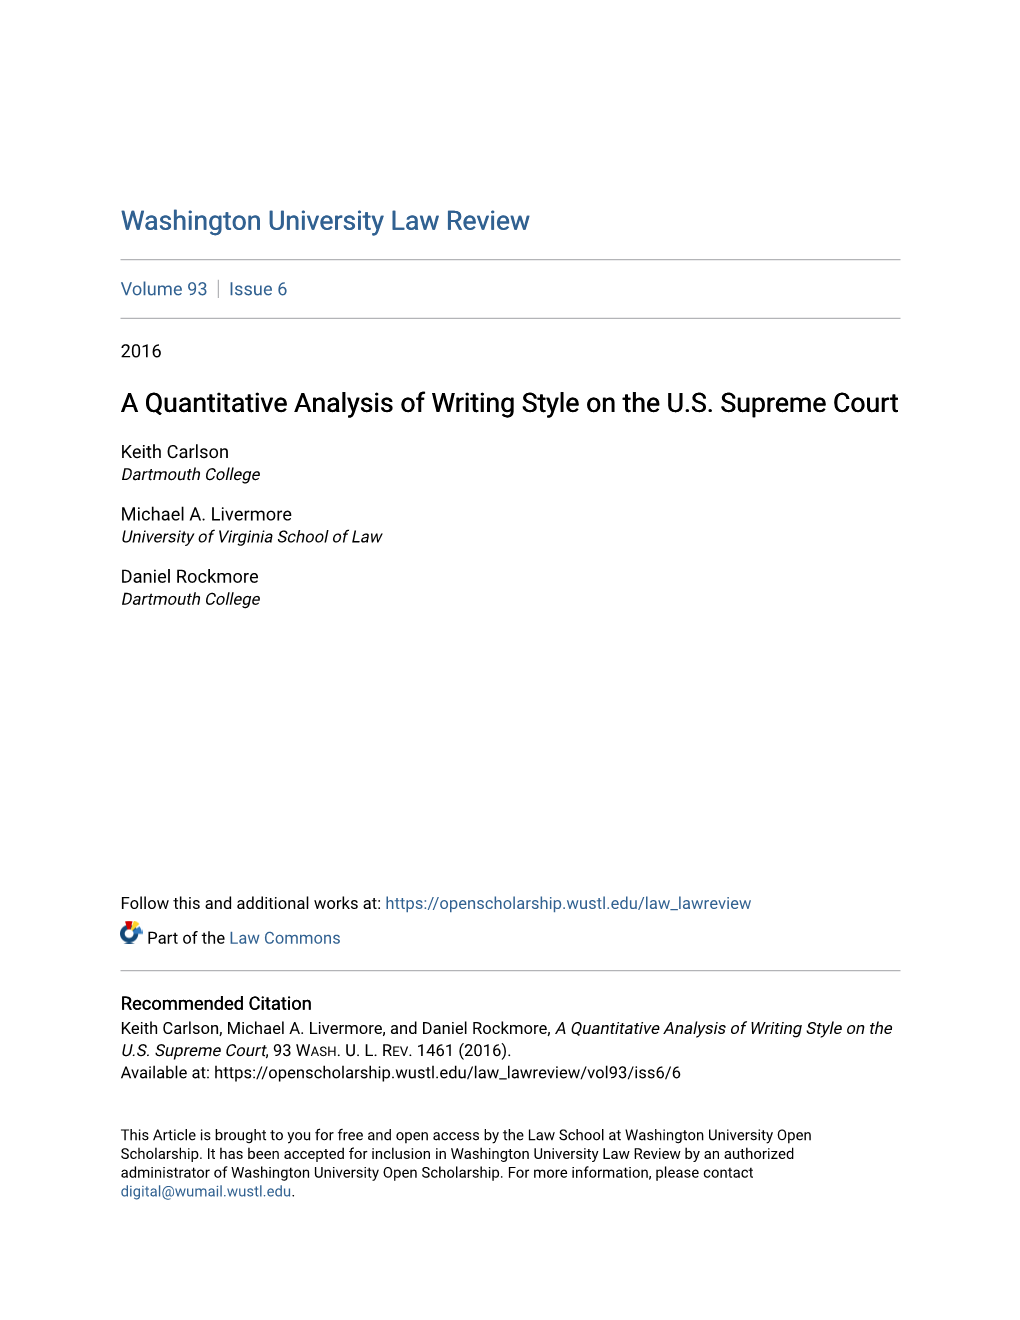 A Quantitative Analysis of Writing Style on the U.S. Supreme Court